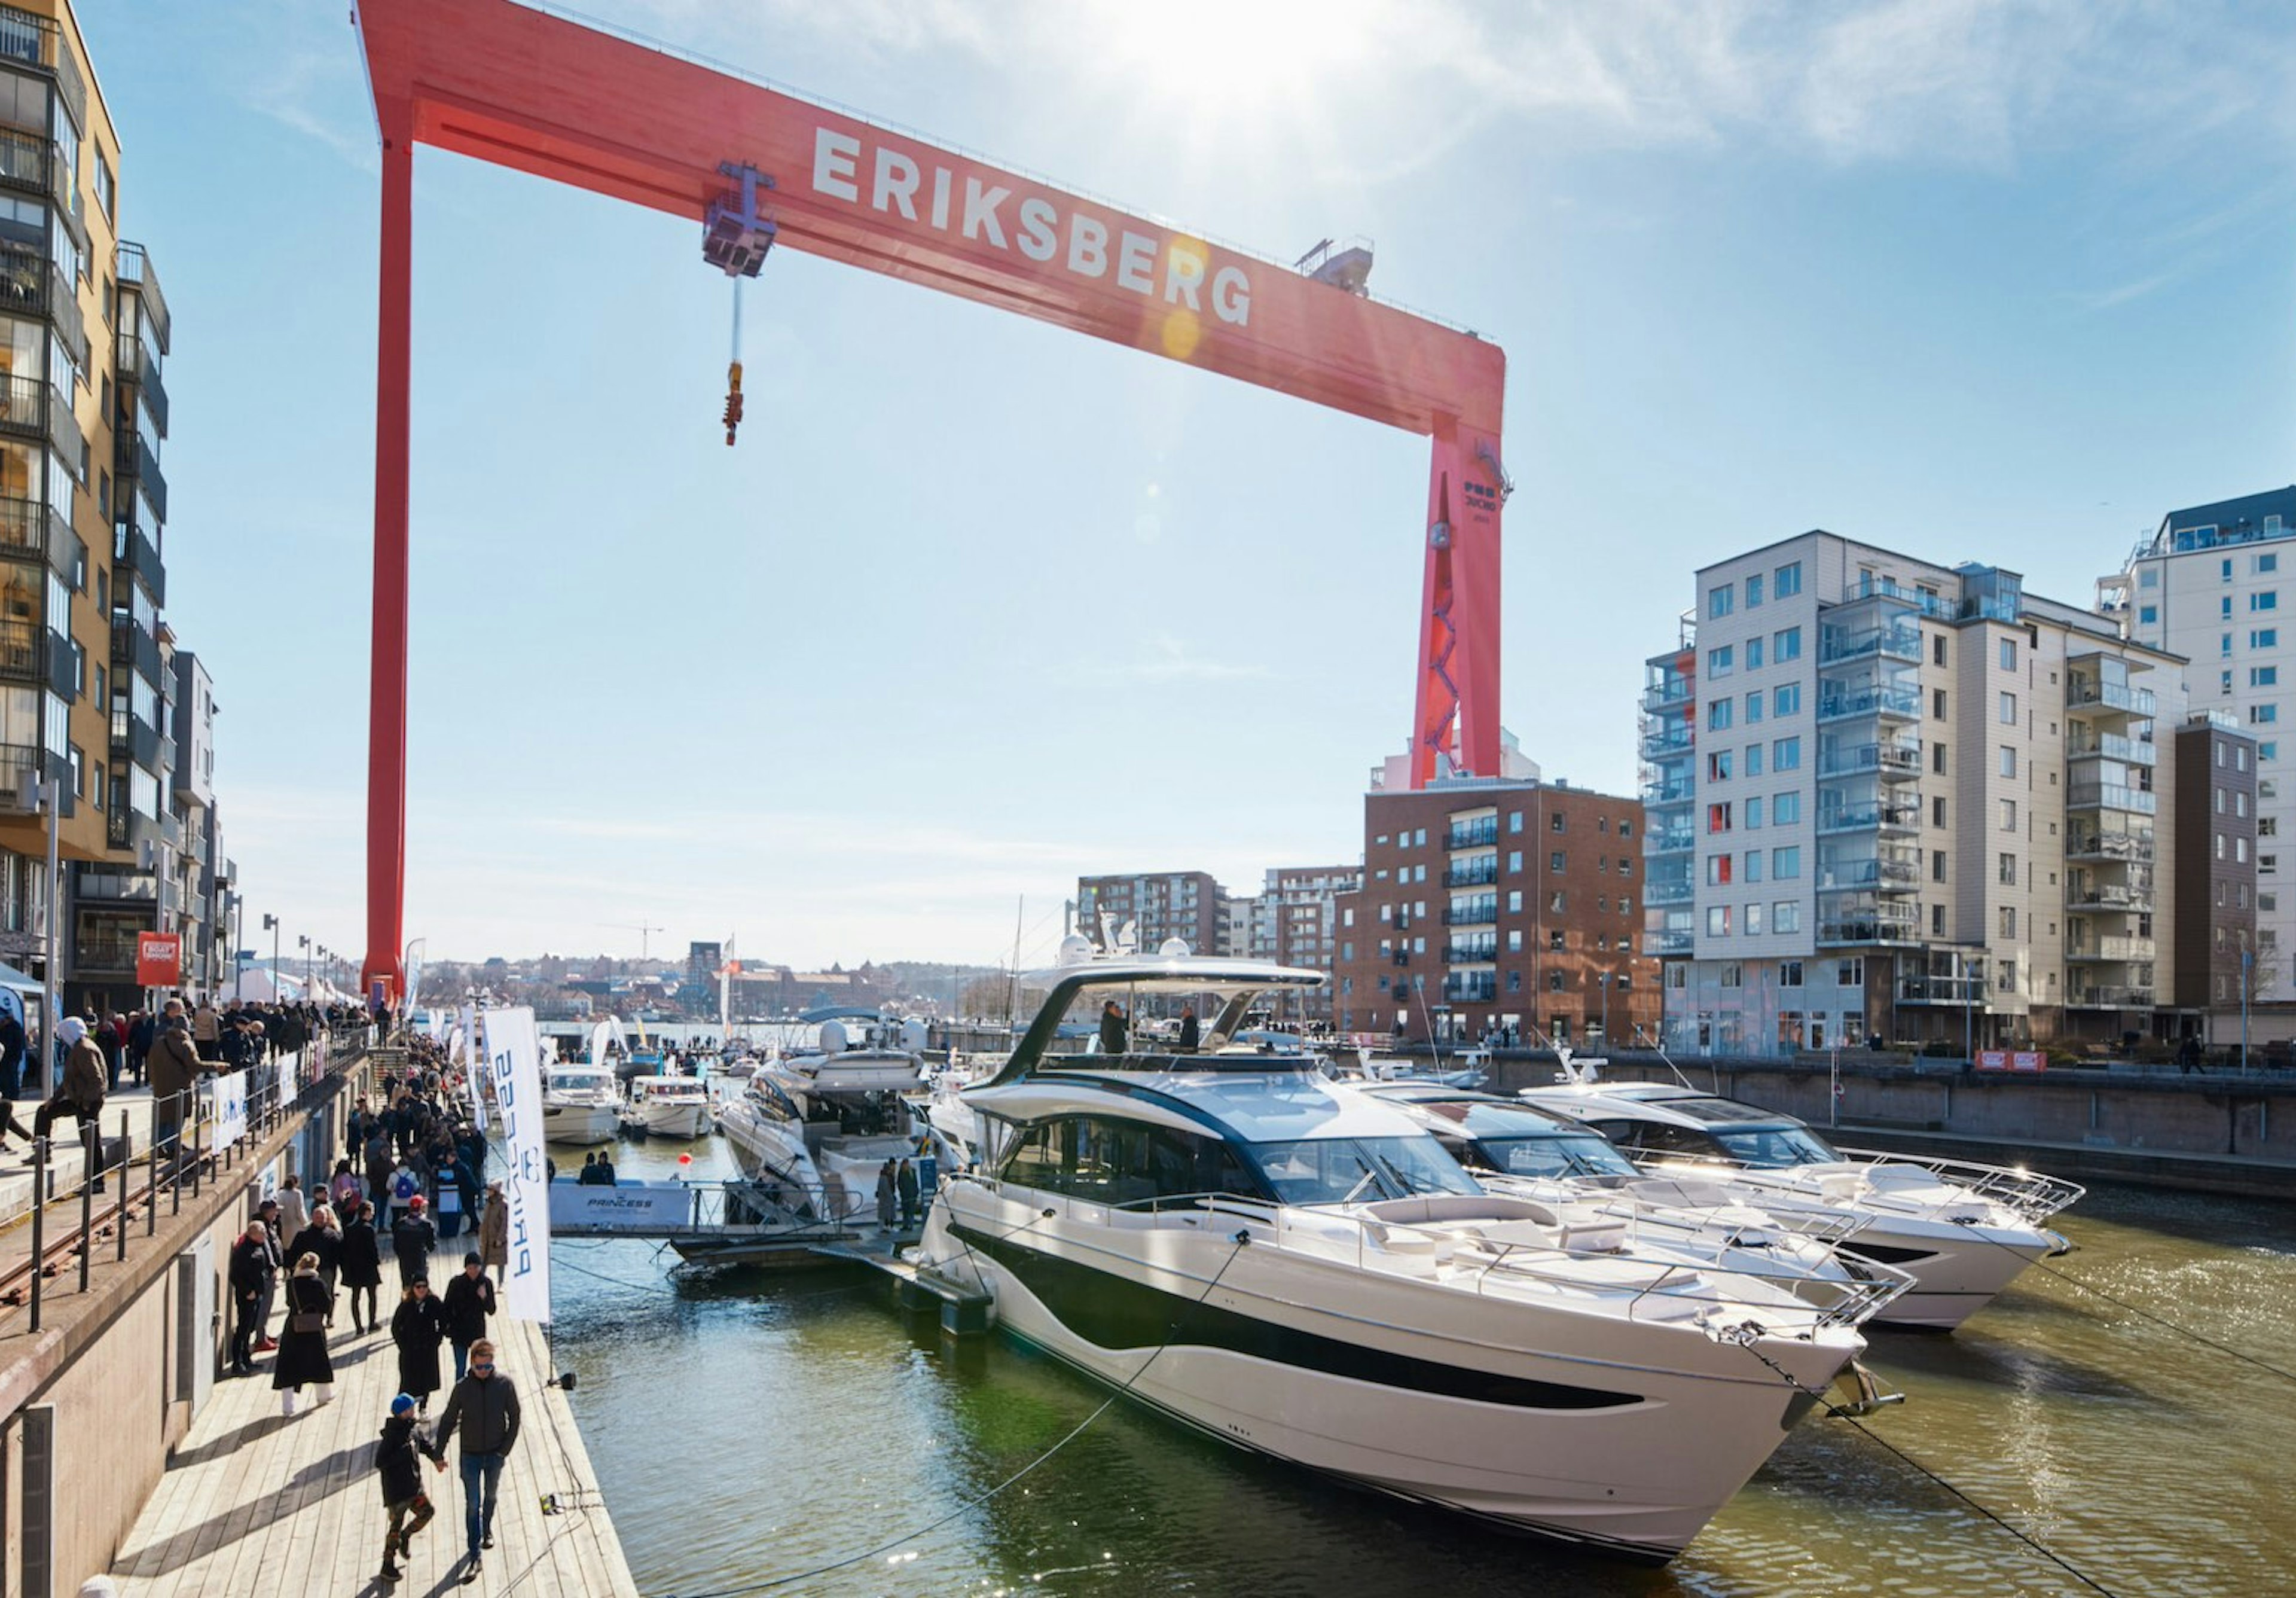 Eriksberg-boat-show